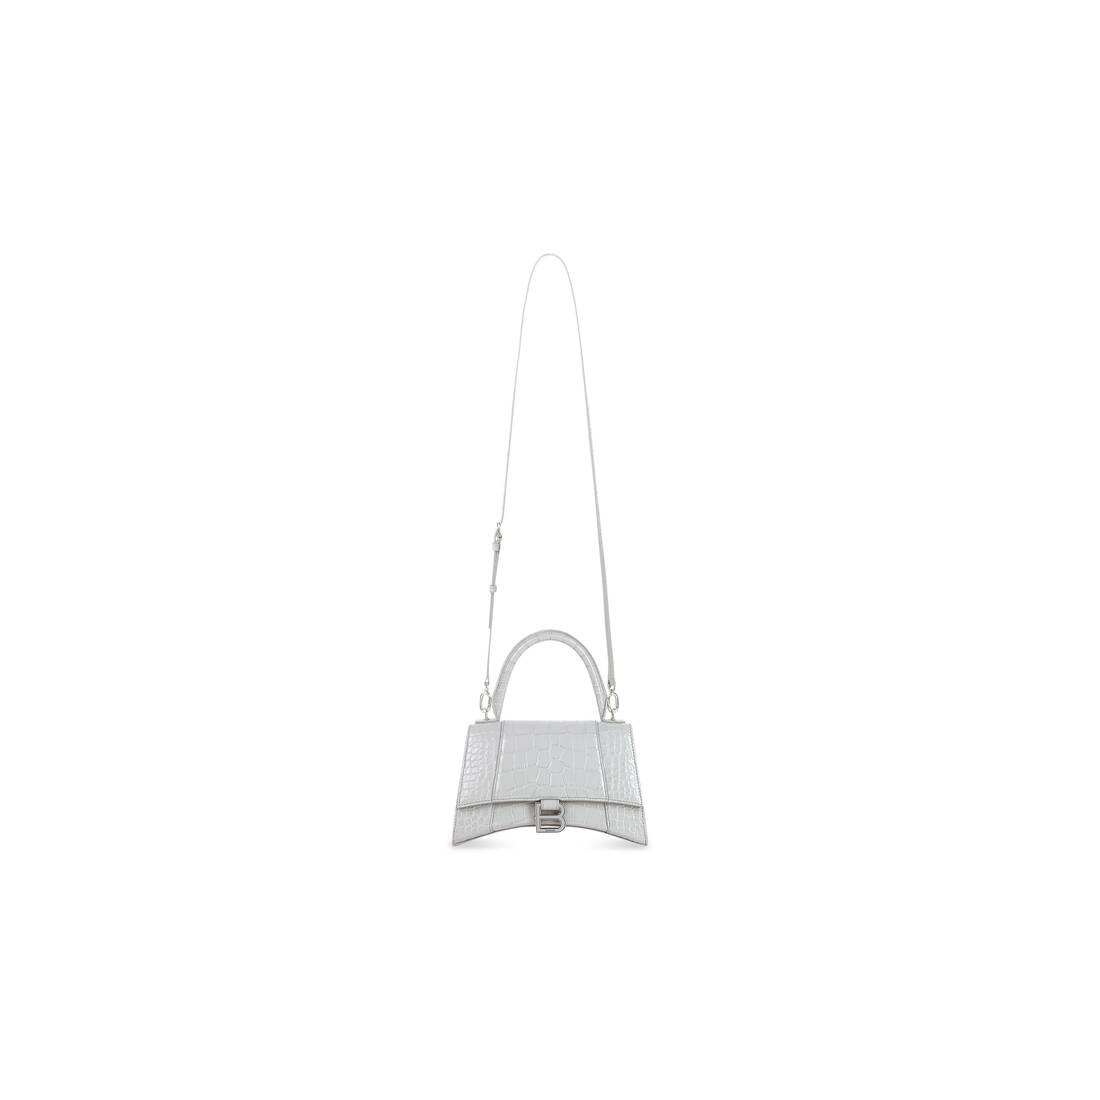 Balenciaga Hourglass Small Top Handle Bag Crocodile Embossed White